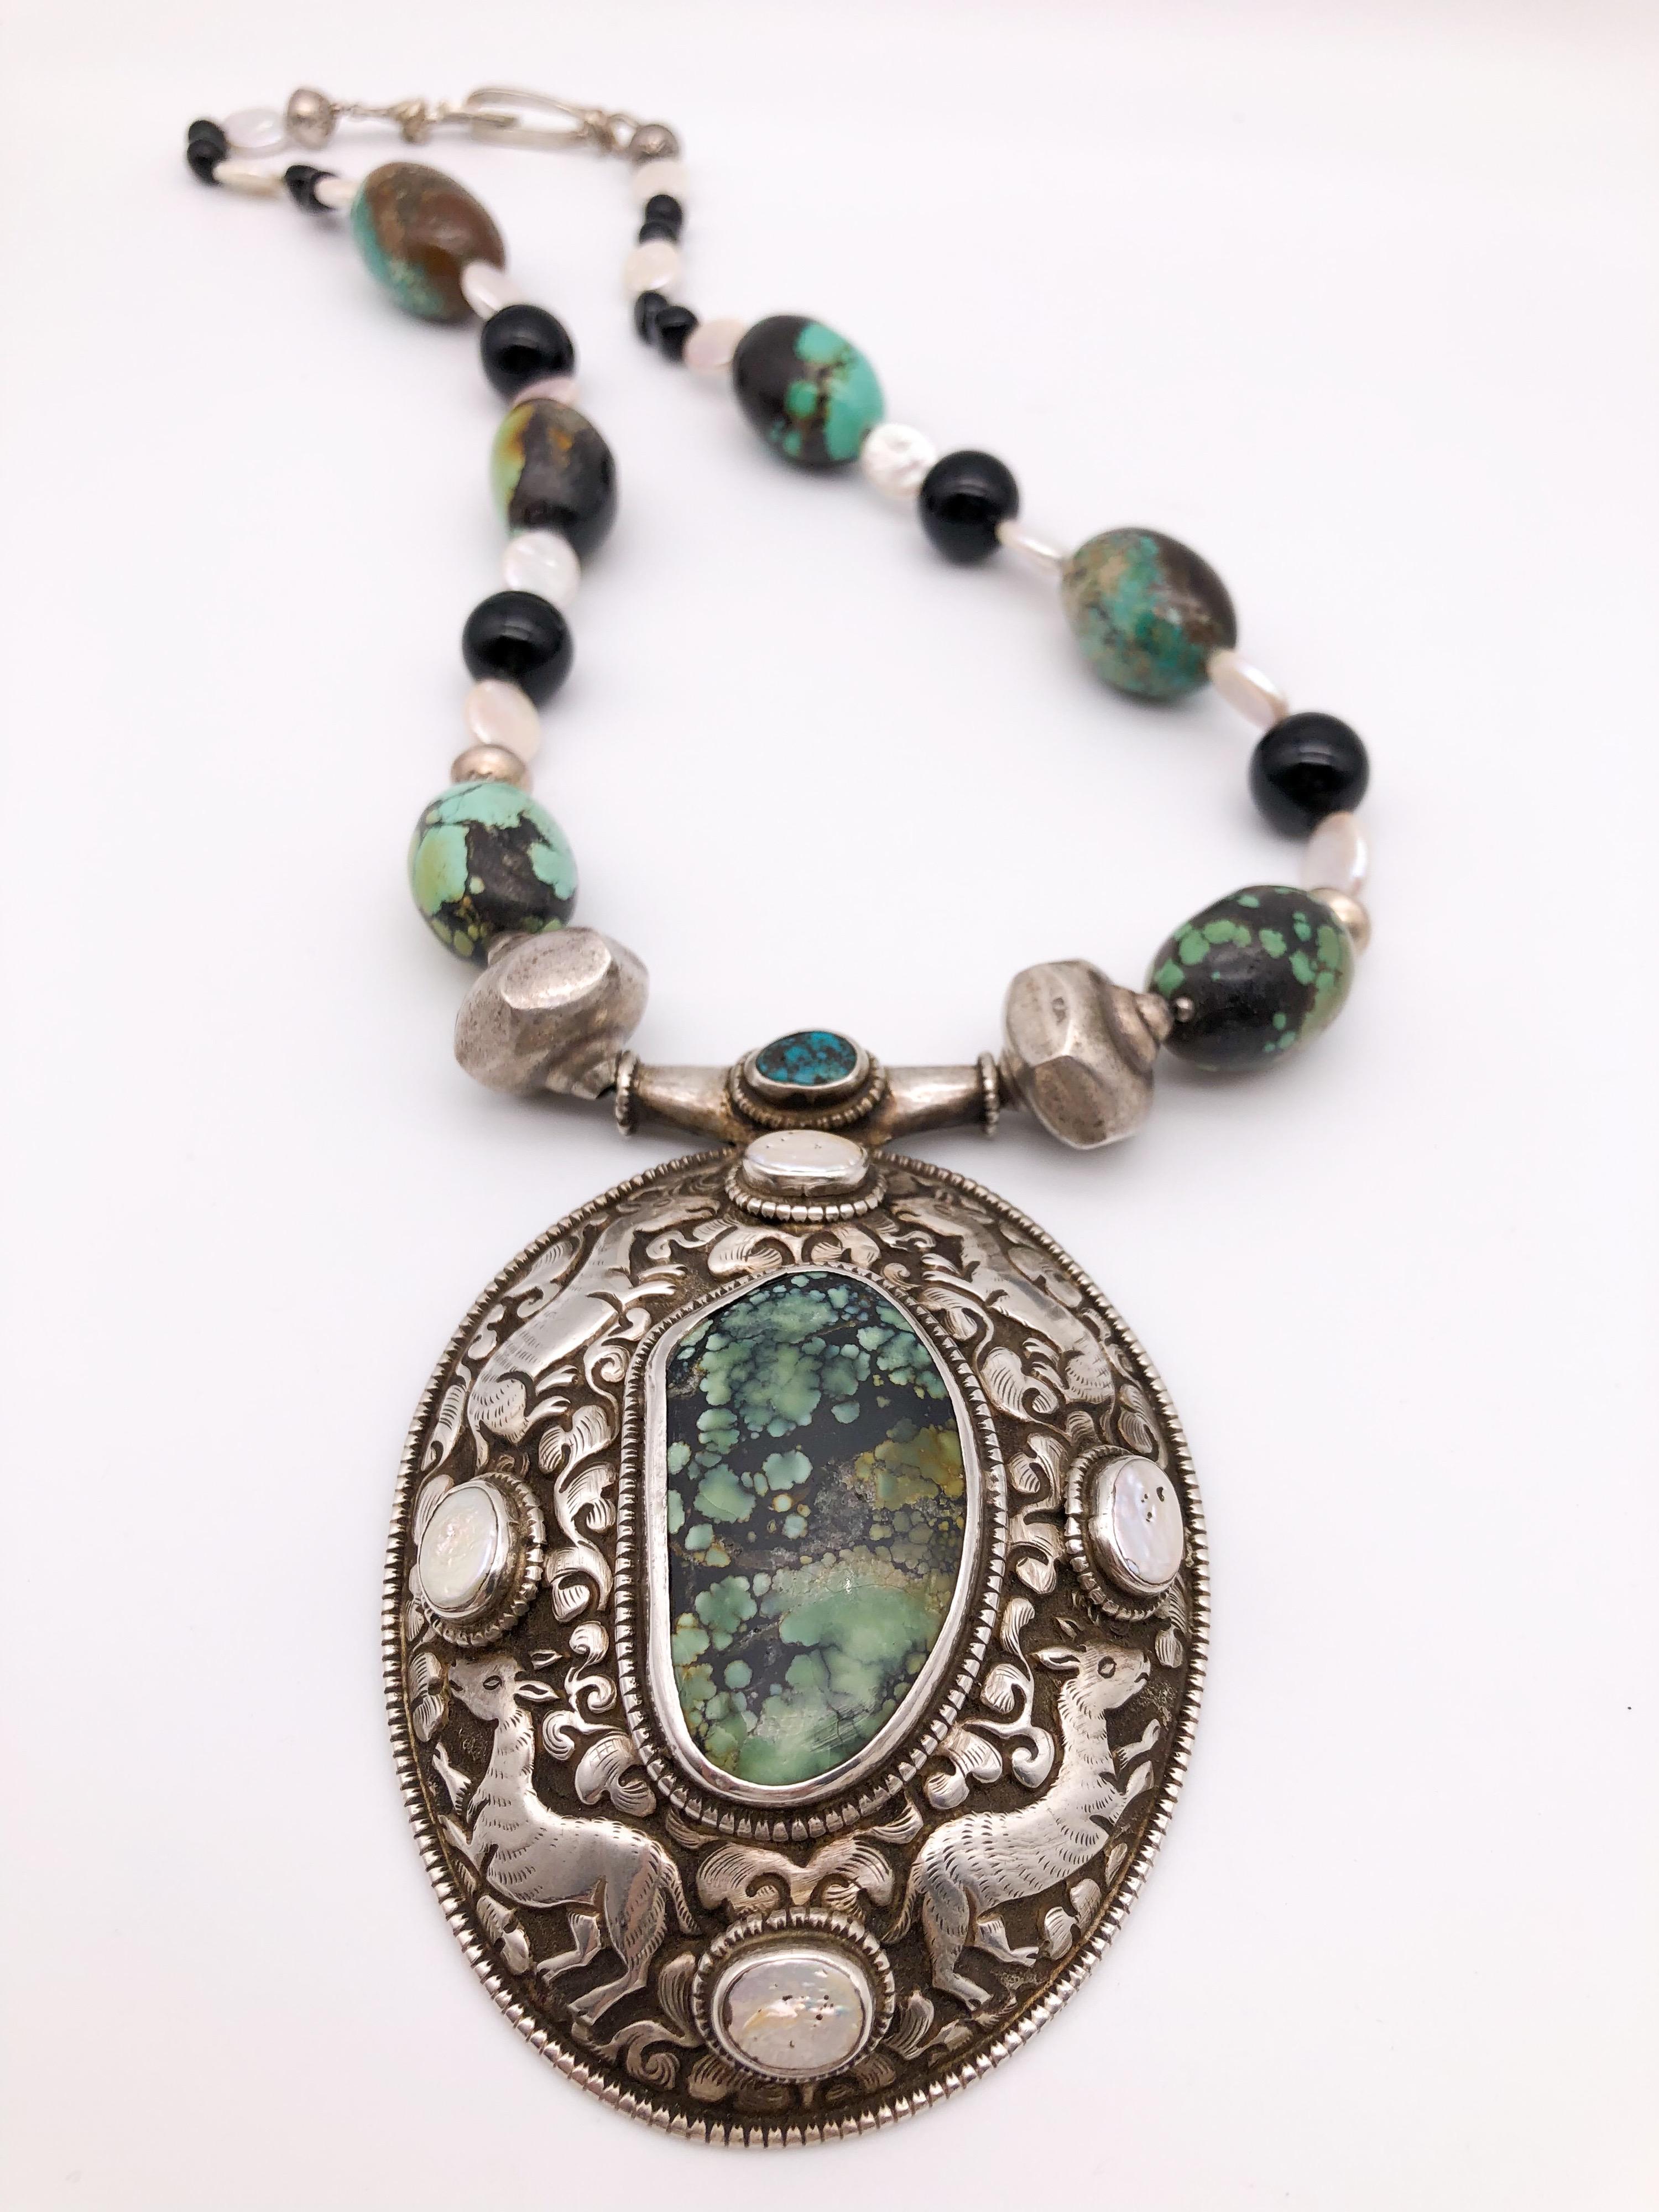 Women's A.Jeschel Marvelous Turquoise necklace with Tibetan Pendant For Sale